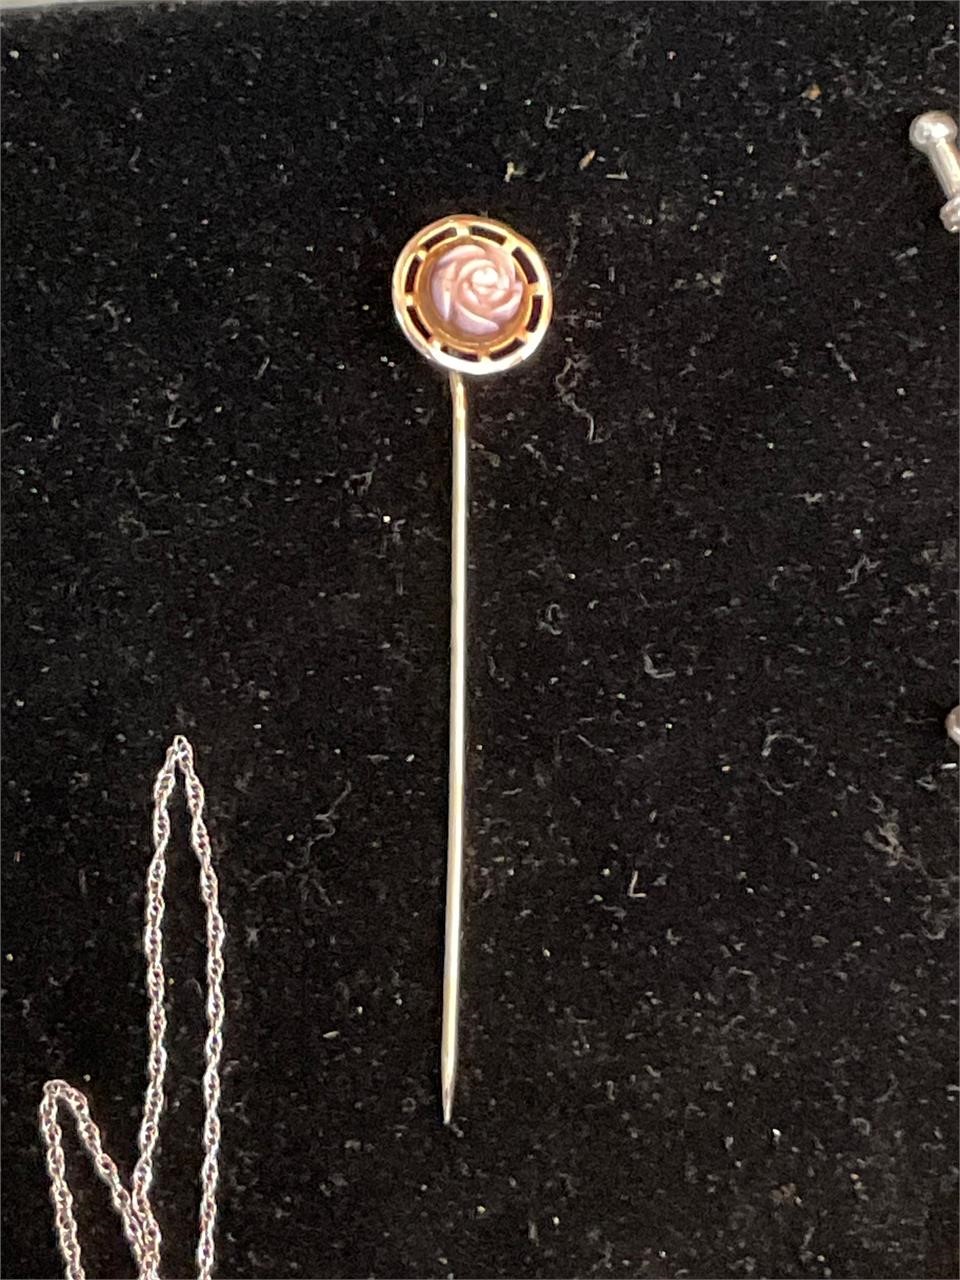 Antique Gold Stick Pin